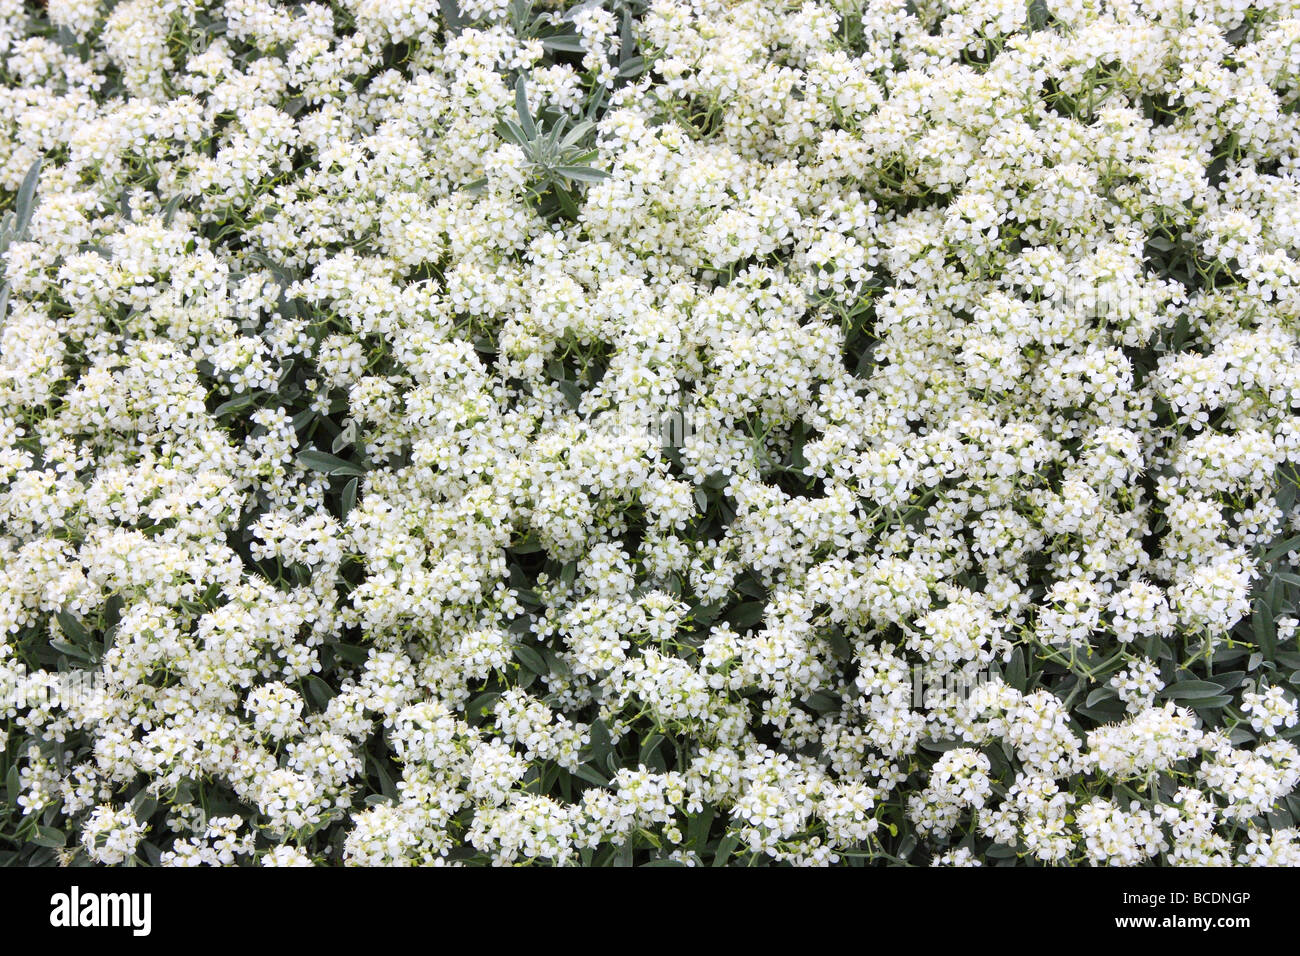 Ptilotrichum spinosum white flowers blooming Stock Photo